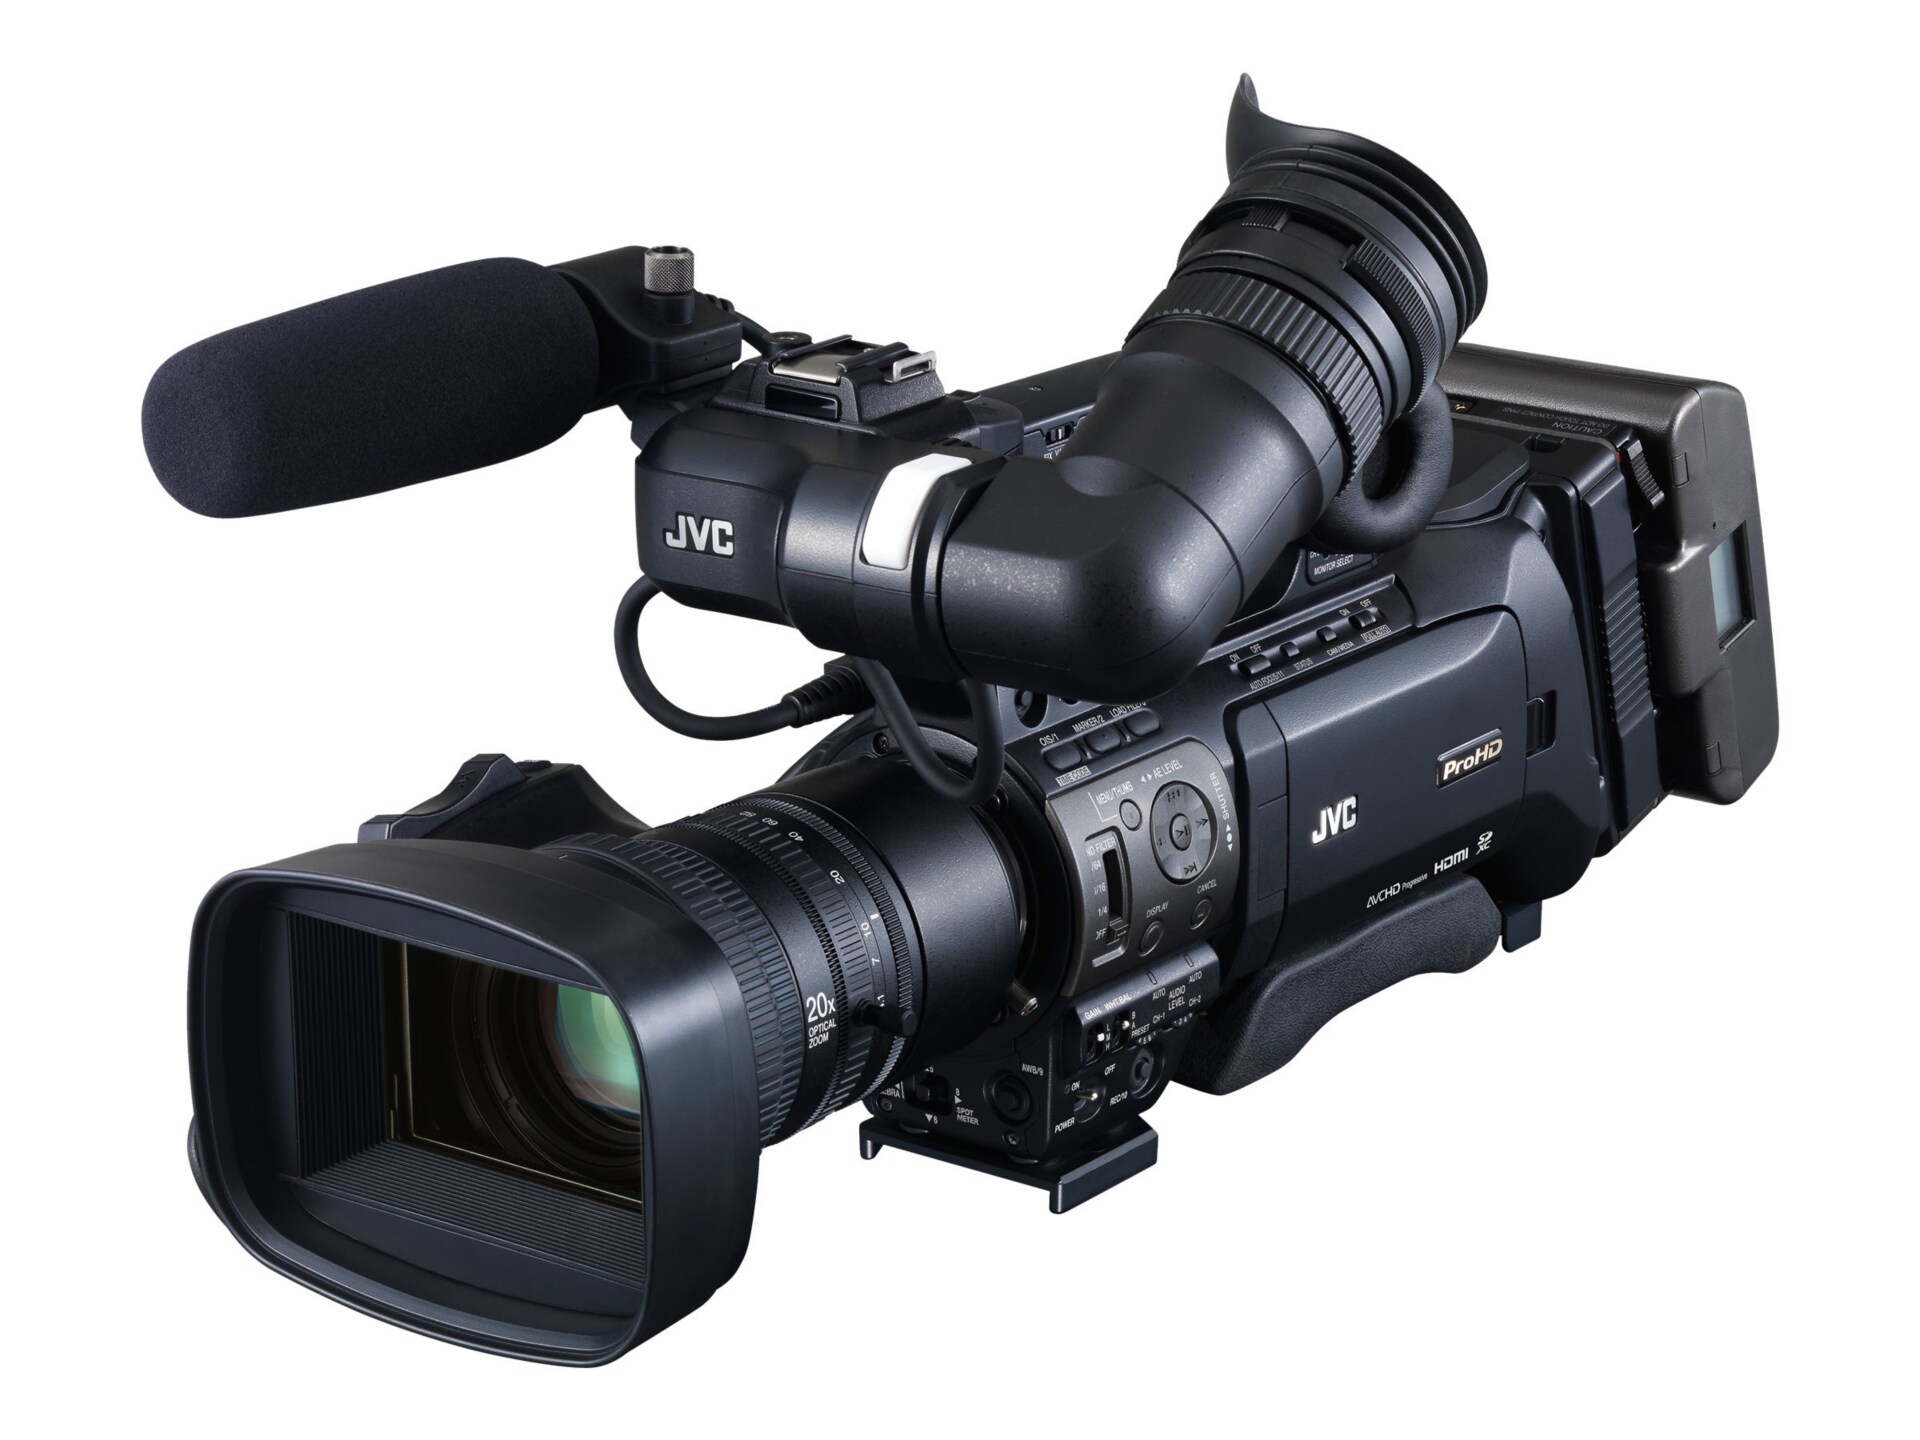 JVC ProHD GY-HM890U - camcorder - Fujinon Fujinon XT17sx45BRMK3 lens - storage: flash card